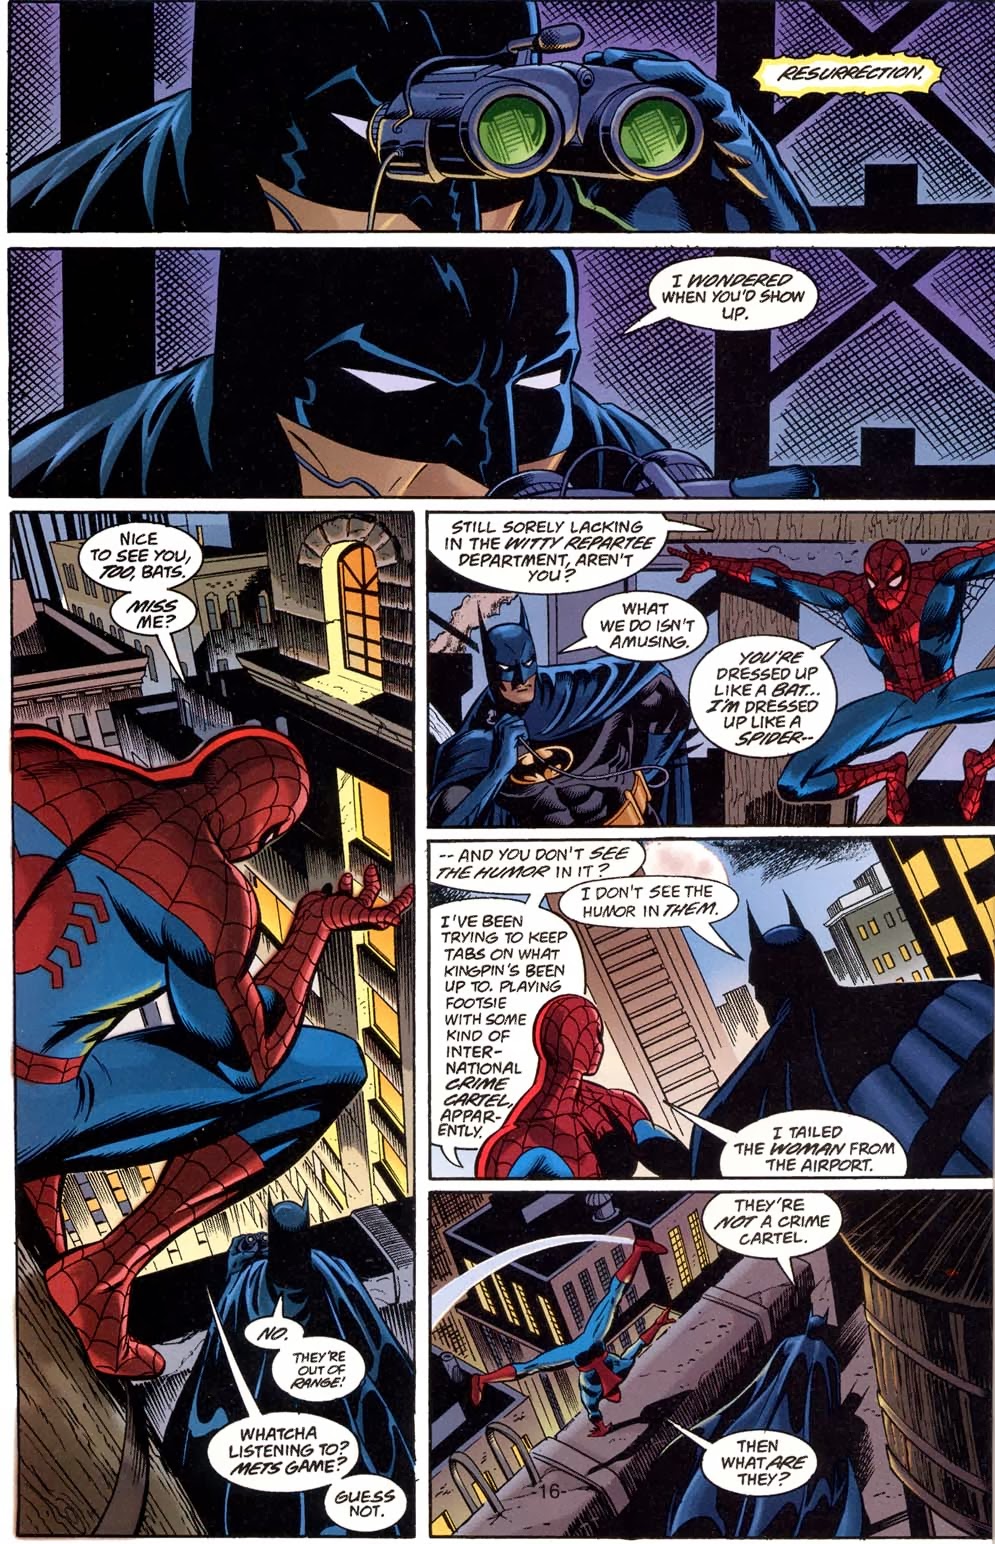 Batman spiderman crossover comic